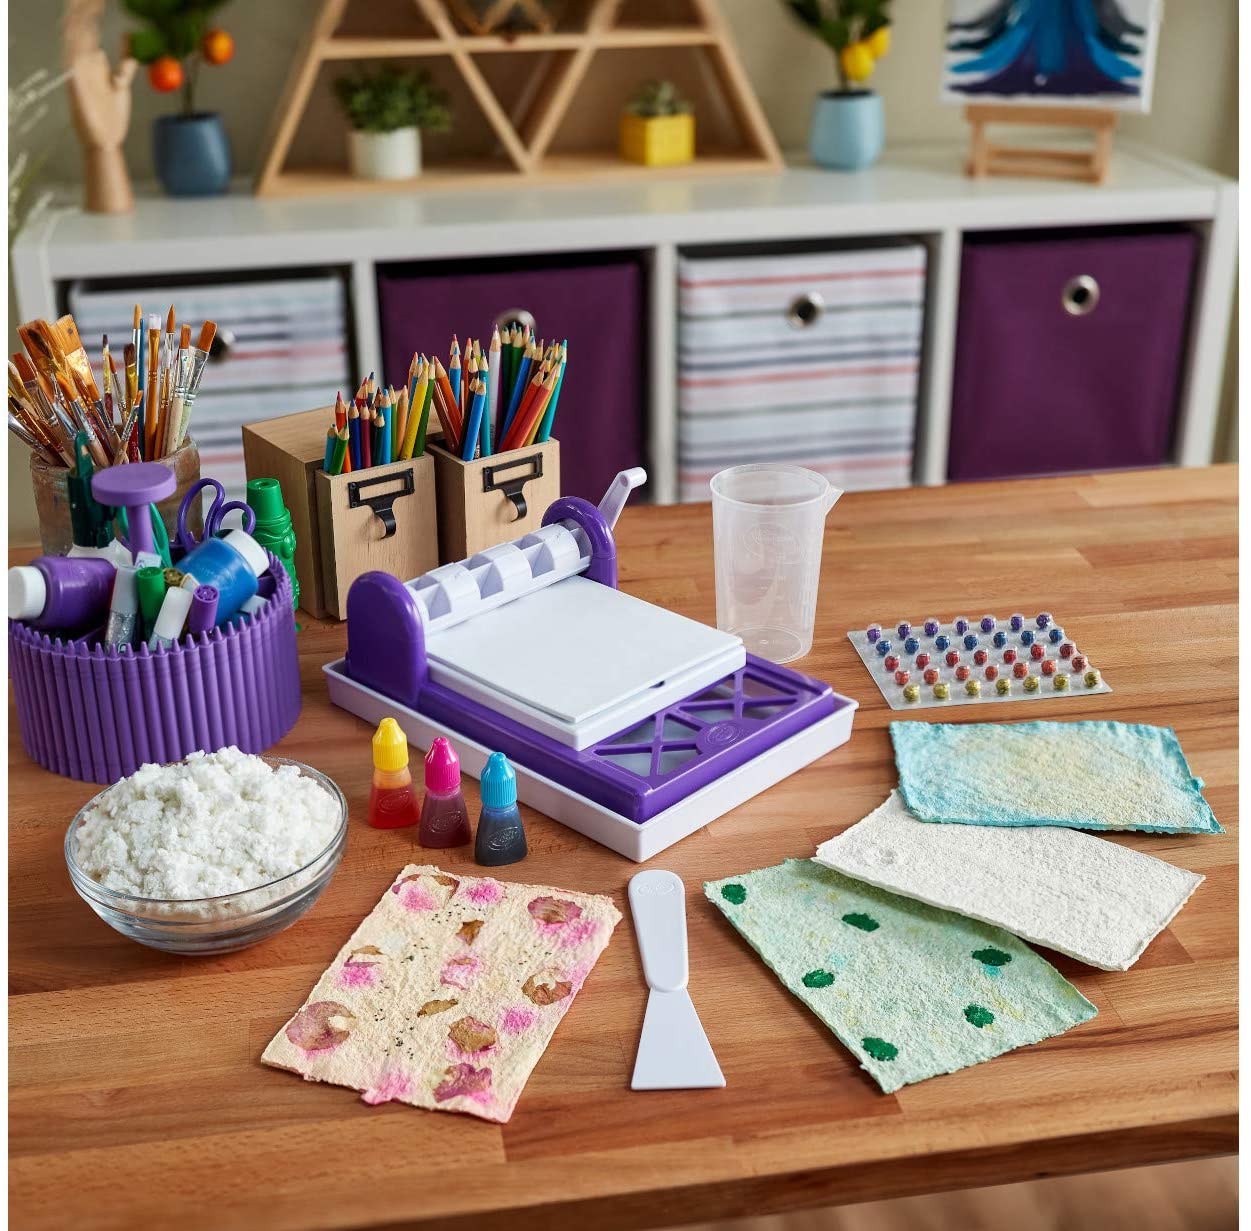 Crayola Paper Maker Craft Kit